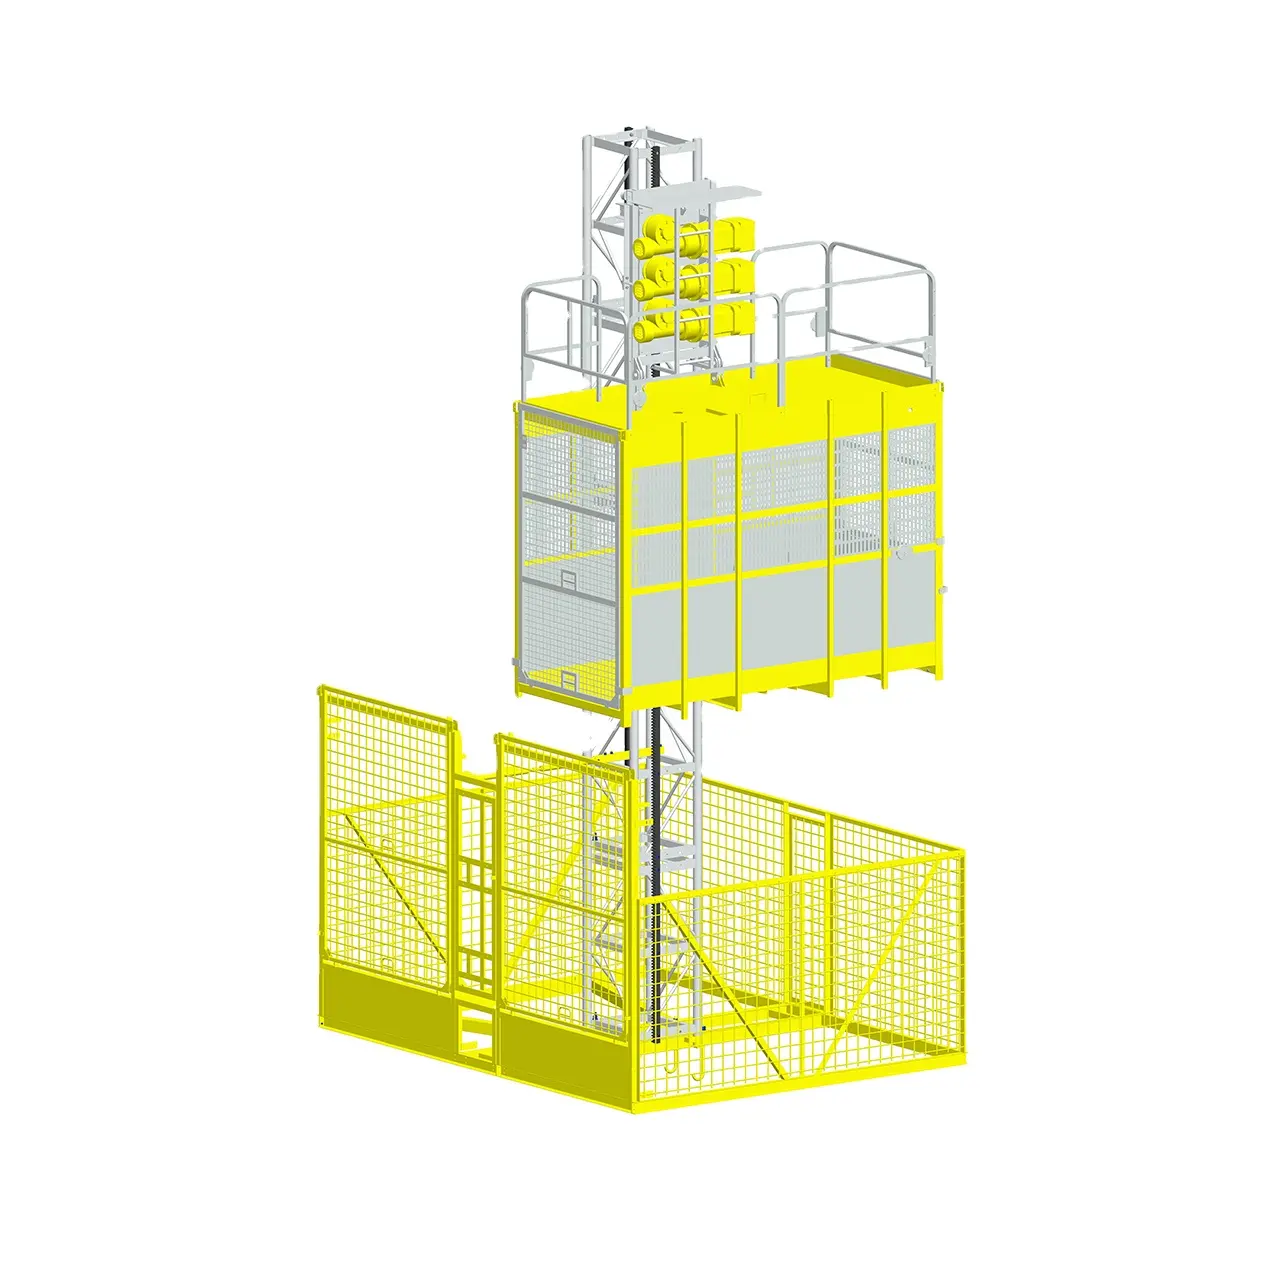 SC160 160 Building Construction Elevator Construction Hoist material lift hoist for high rise buildings